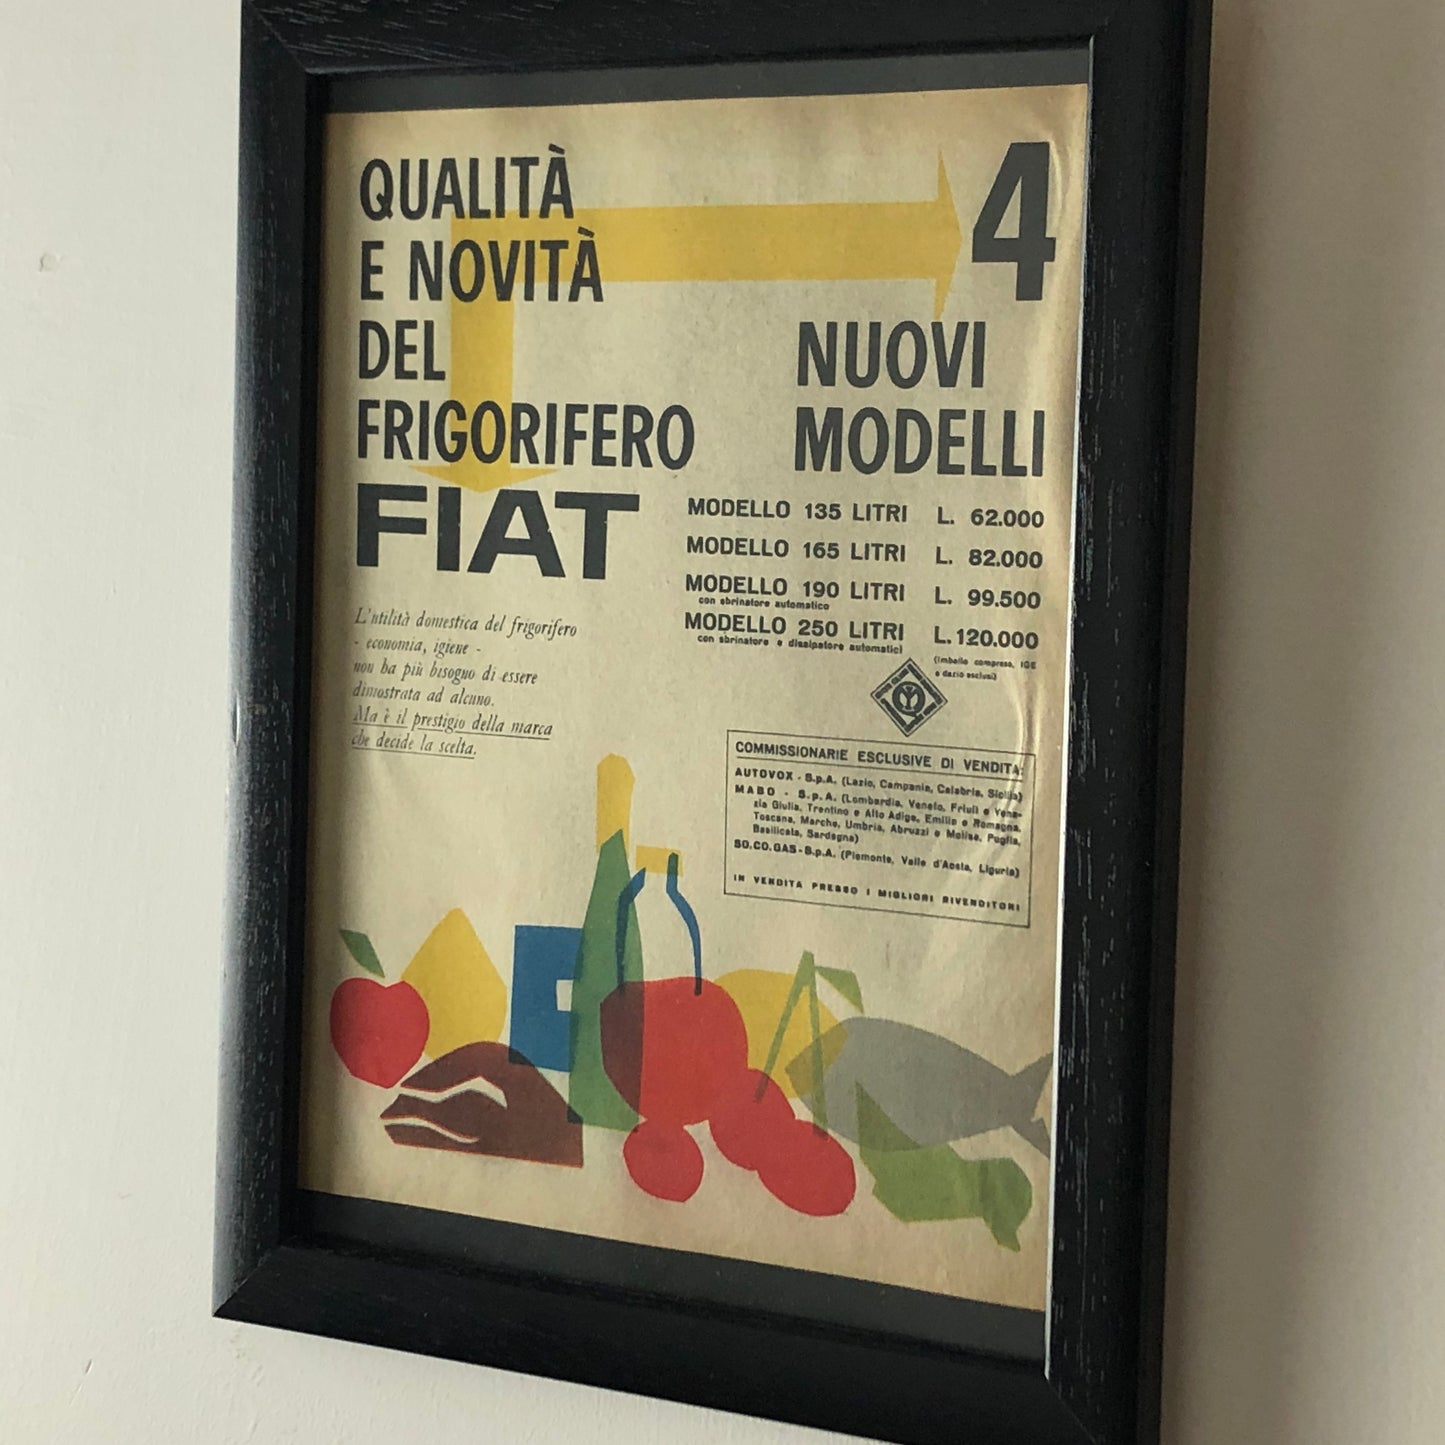 Fiat, 1960 Advertisement  FIAT Refrigerator Range with Price List and Italian Caption